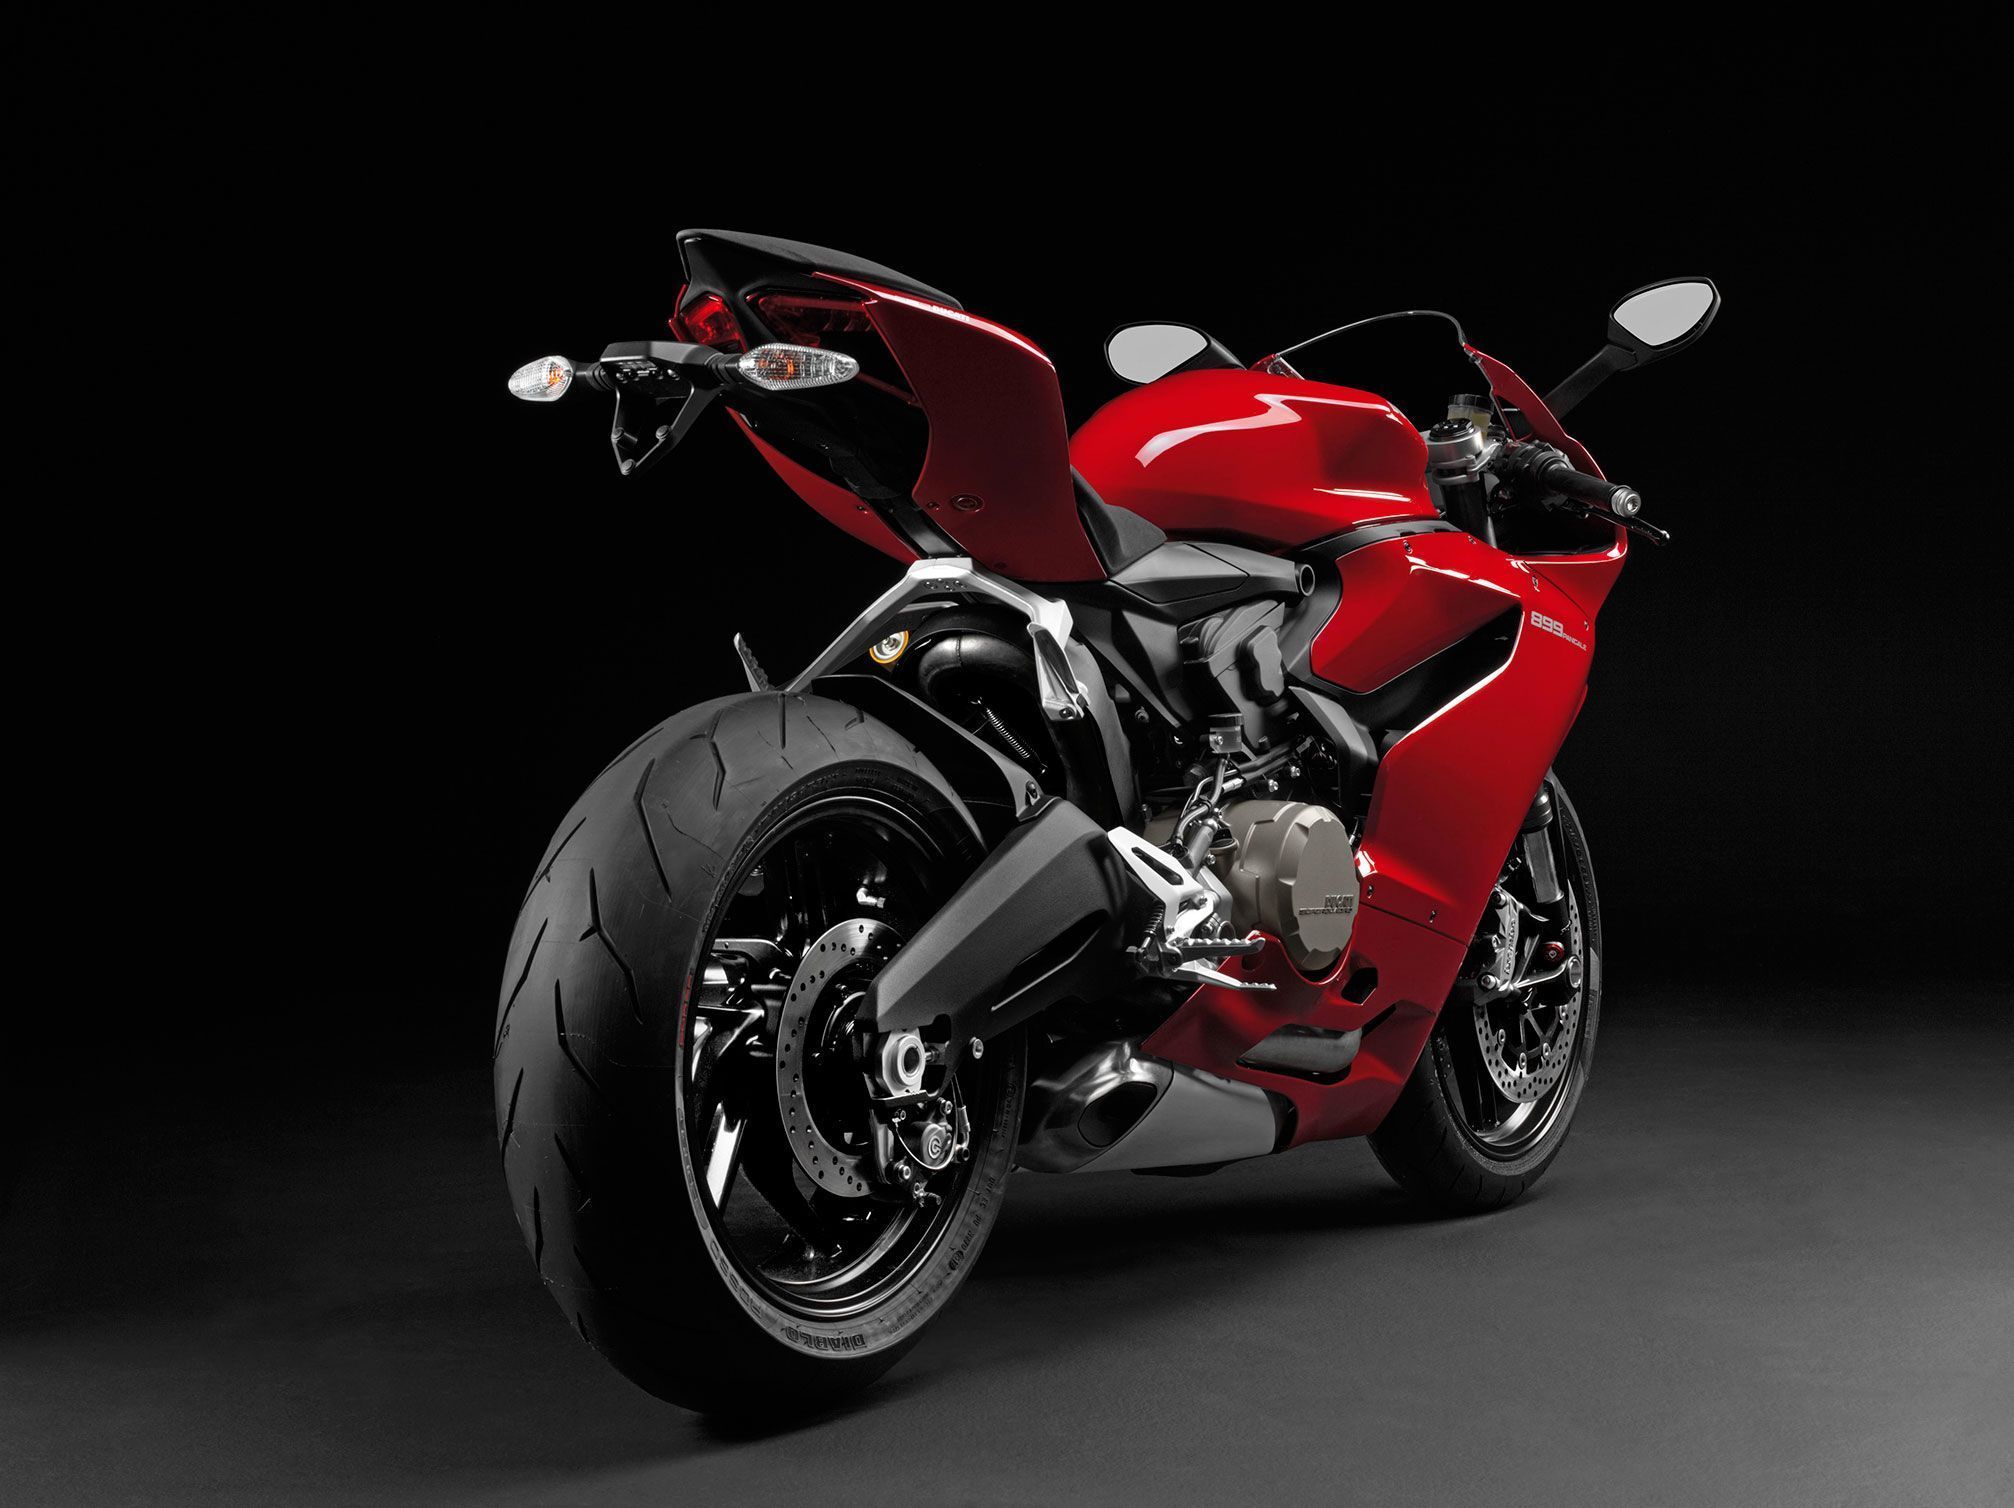 Ducati-899-Panigale-BackView-1280x720-Wallpaper.jpg